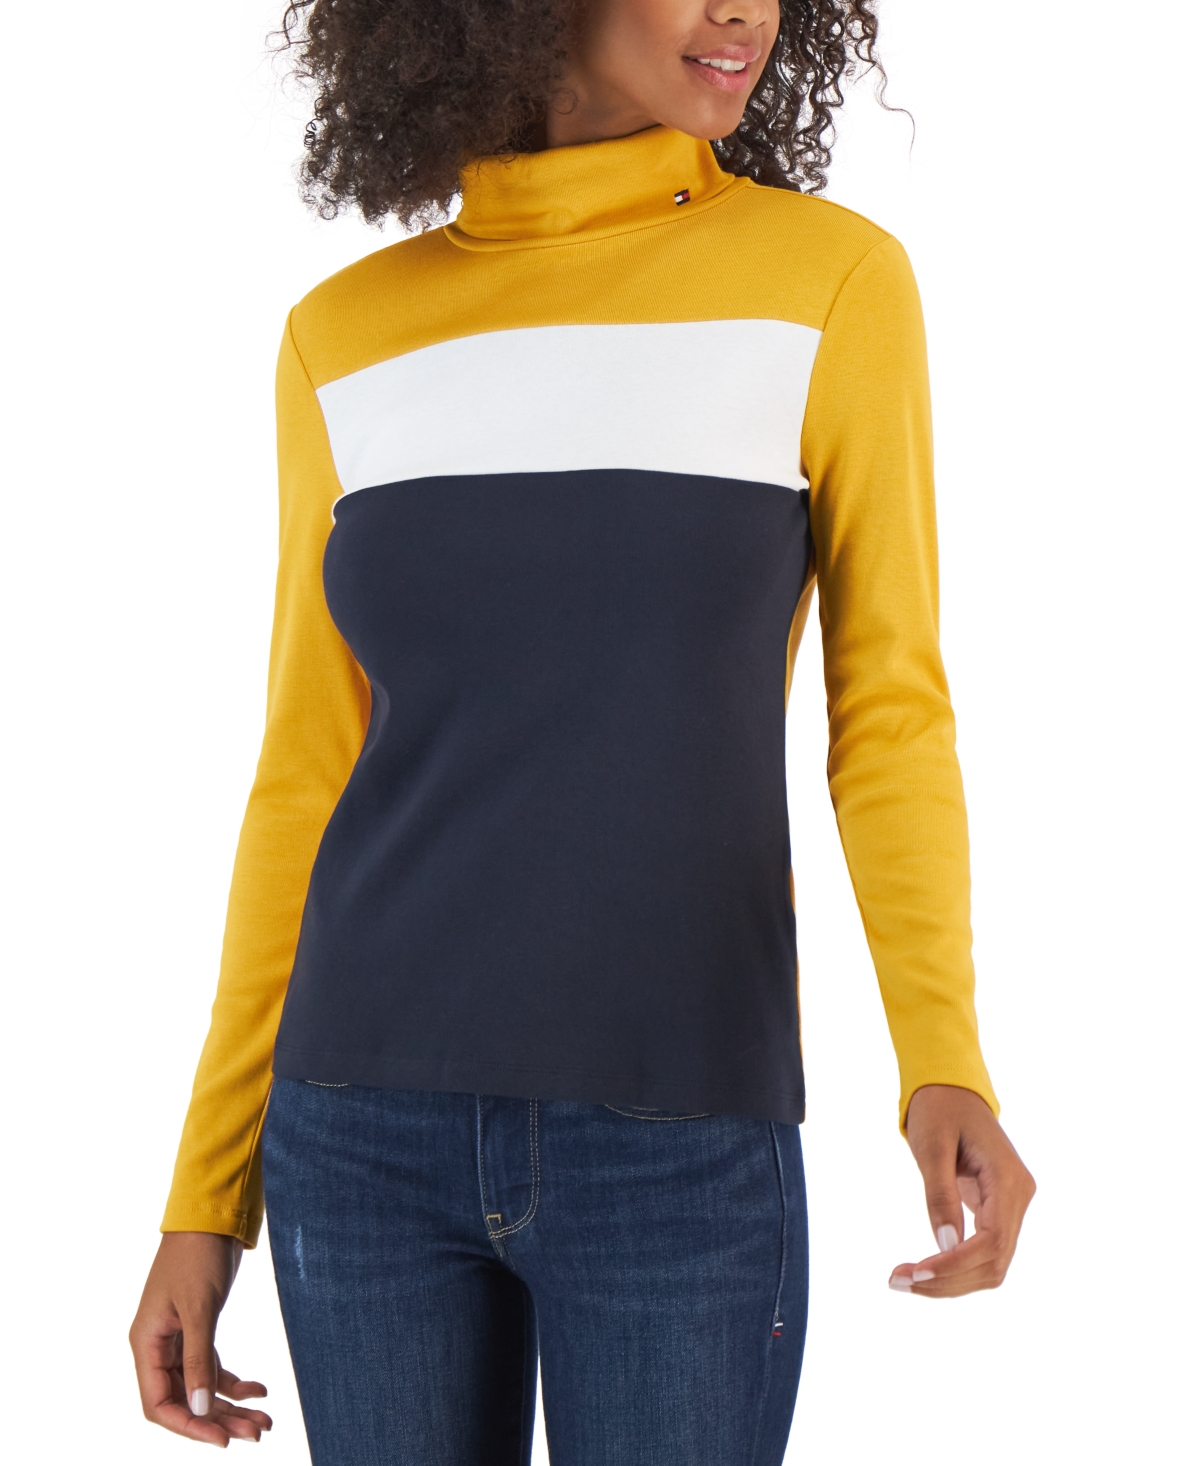 Tommy Hilfiger Women's Cotton Turtleneck Colorblocked Long-Sleeve Top